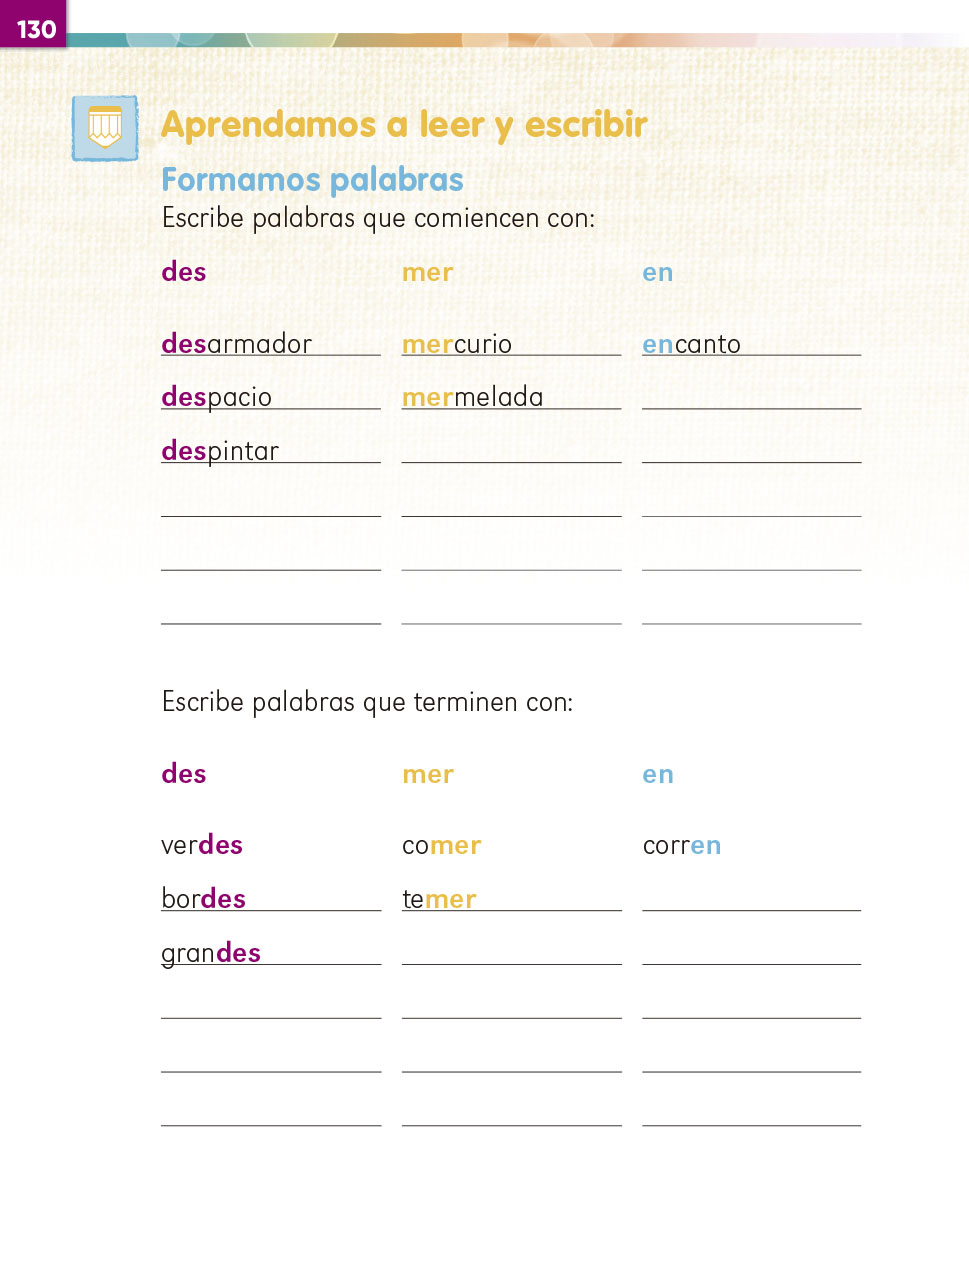 Lengua Materna Español Primer grado - Página 130 de 226 - Libros de Texto  Online